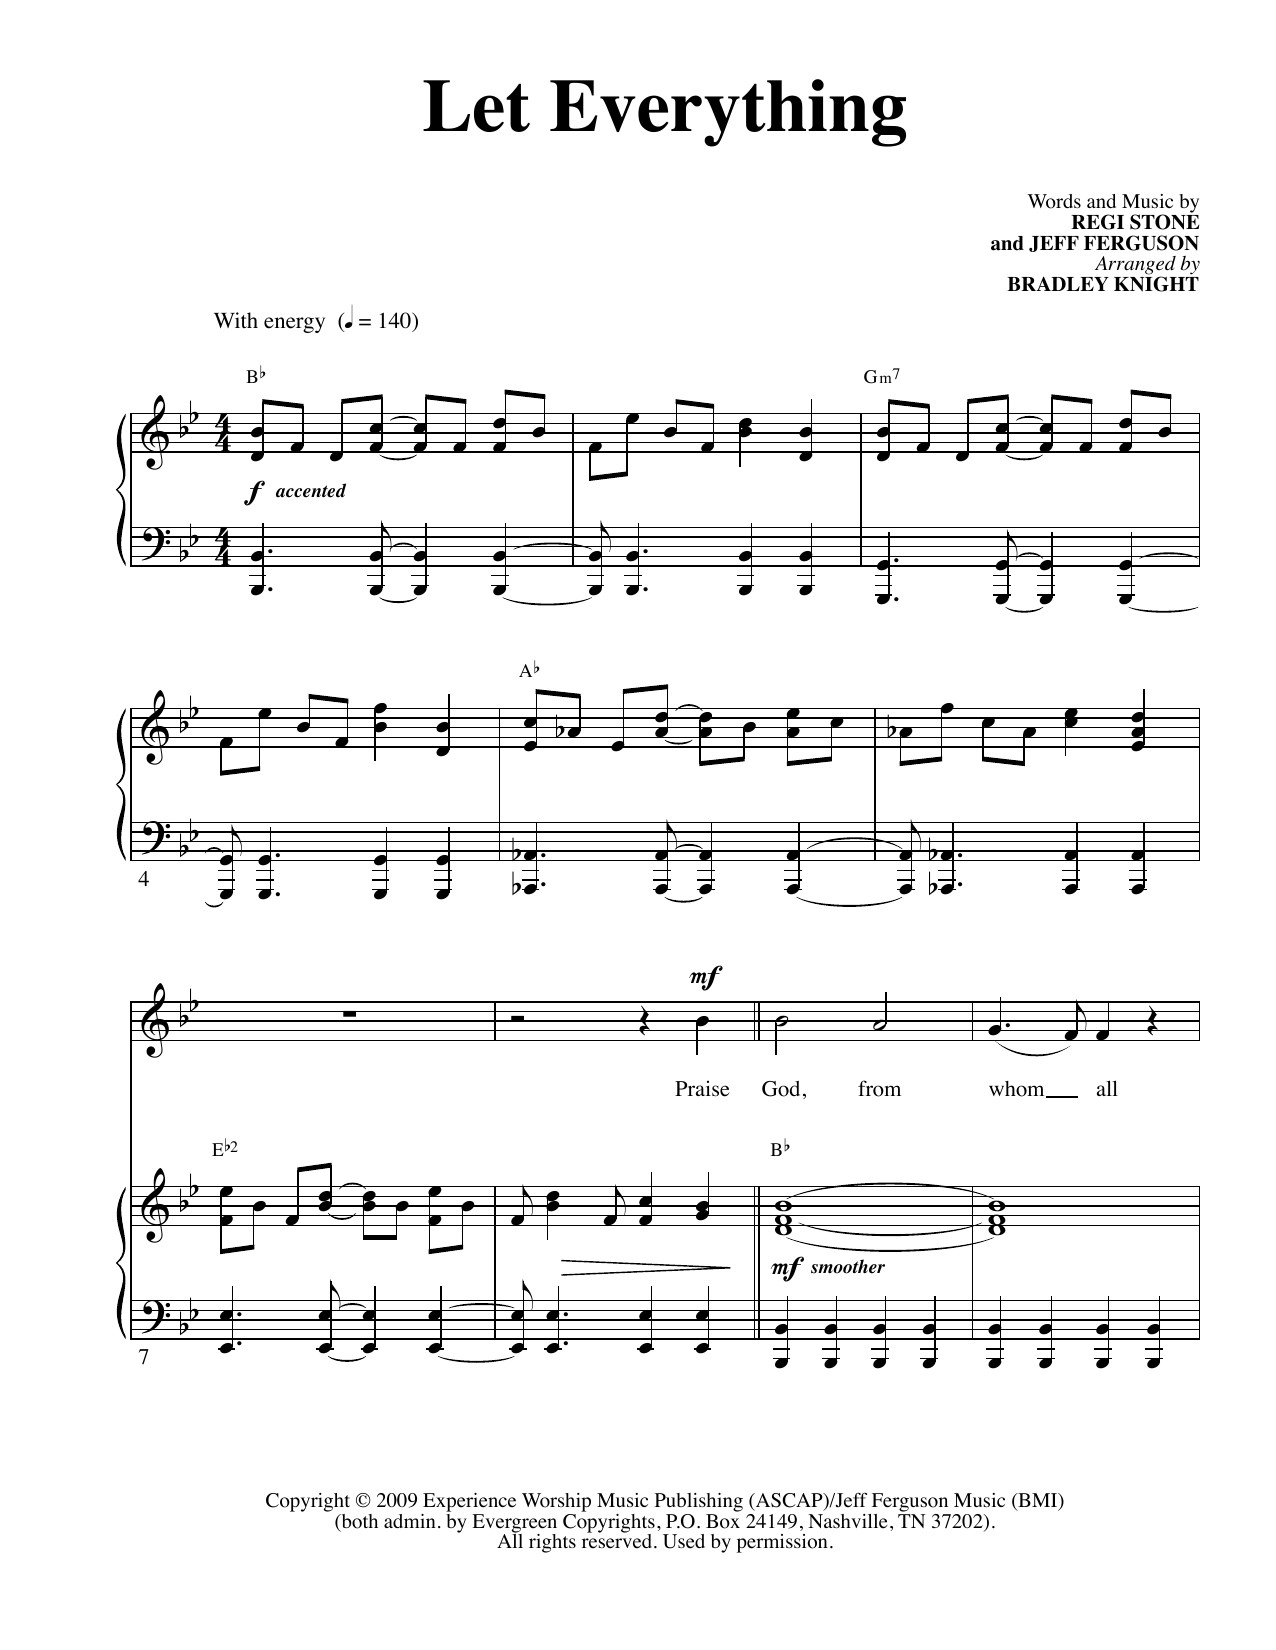 Regi Stone and Jeff Ferguson Let Everything (arr. Bradley Knight) Sheet Music Notes & Chords for SATB Choir - Download or Print PDF